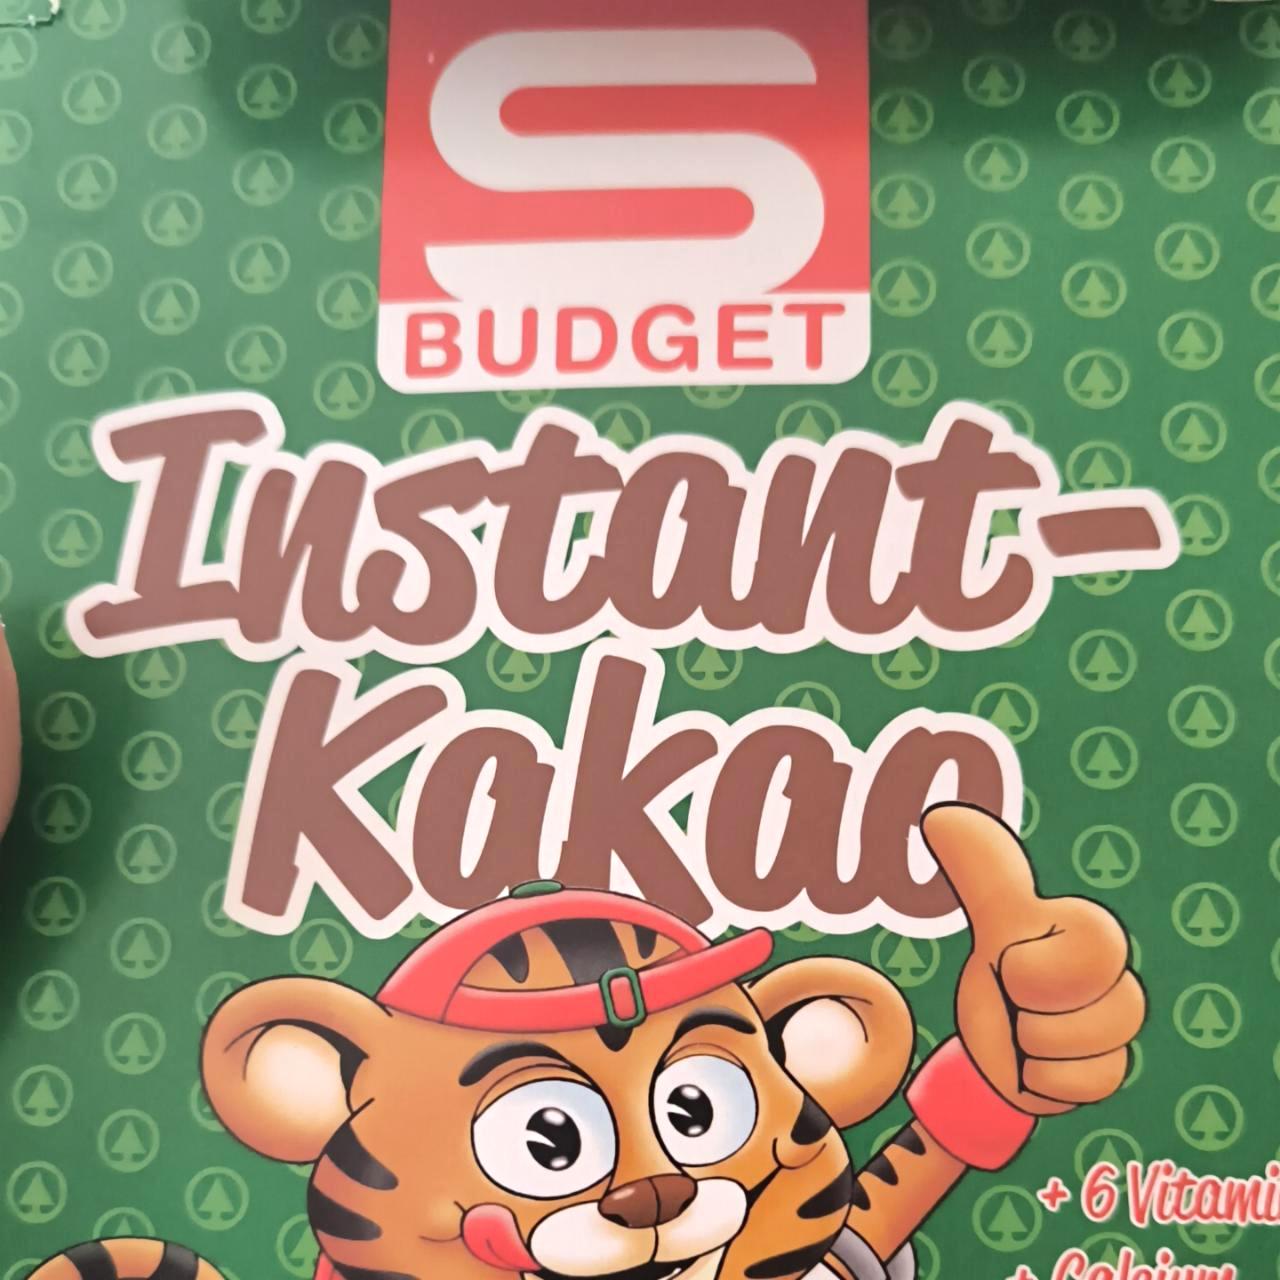 Képek - Instant Kakao S Budget